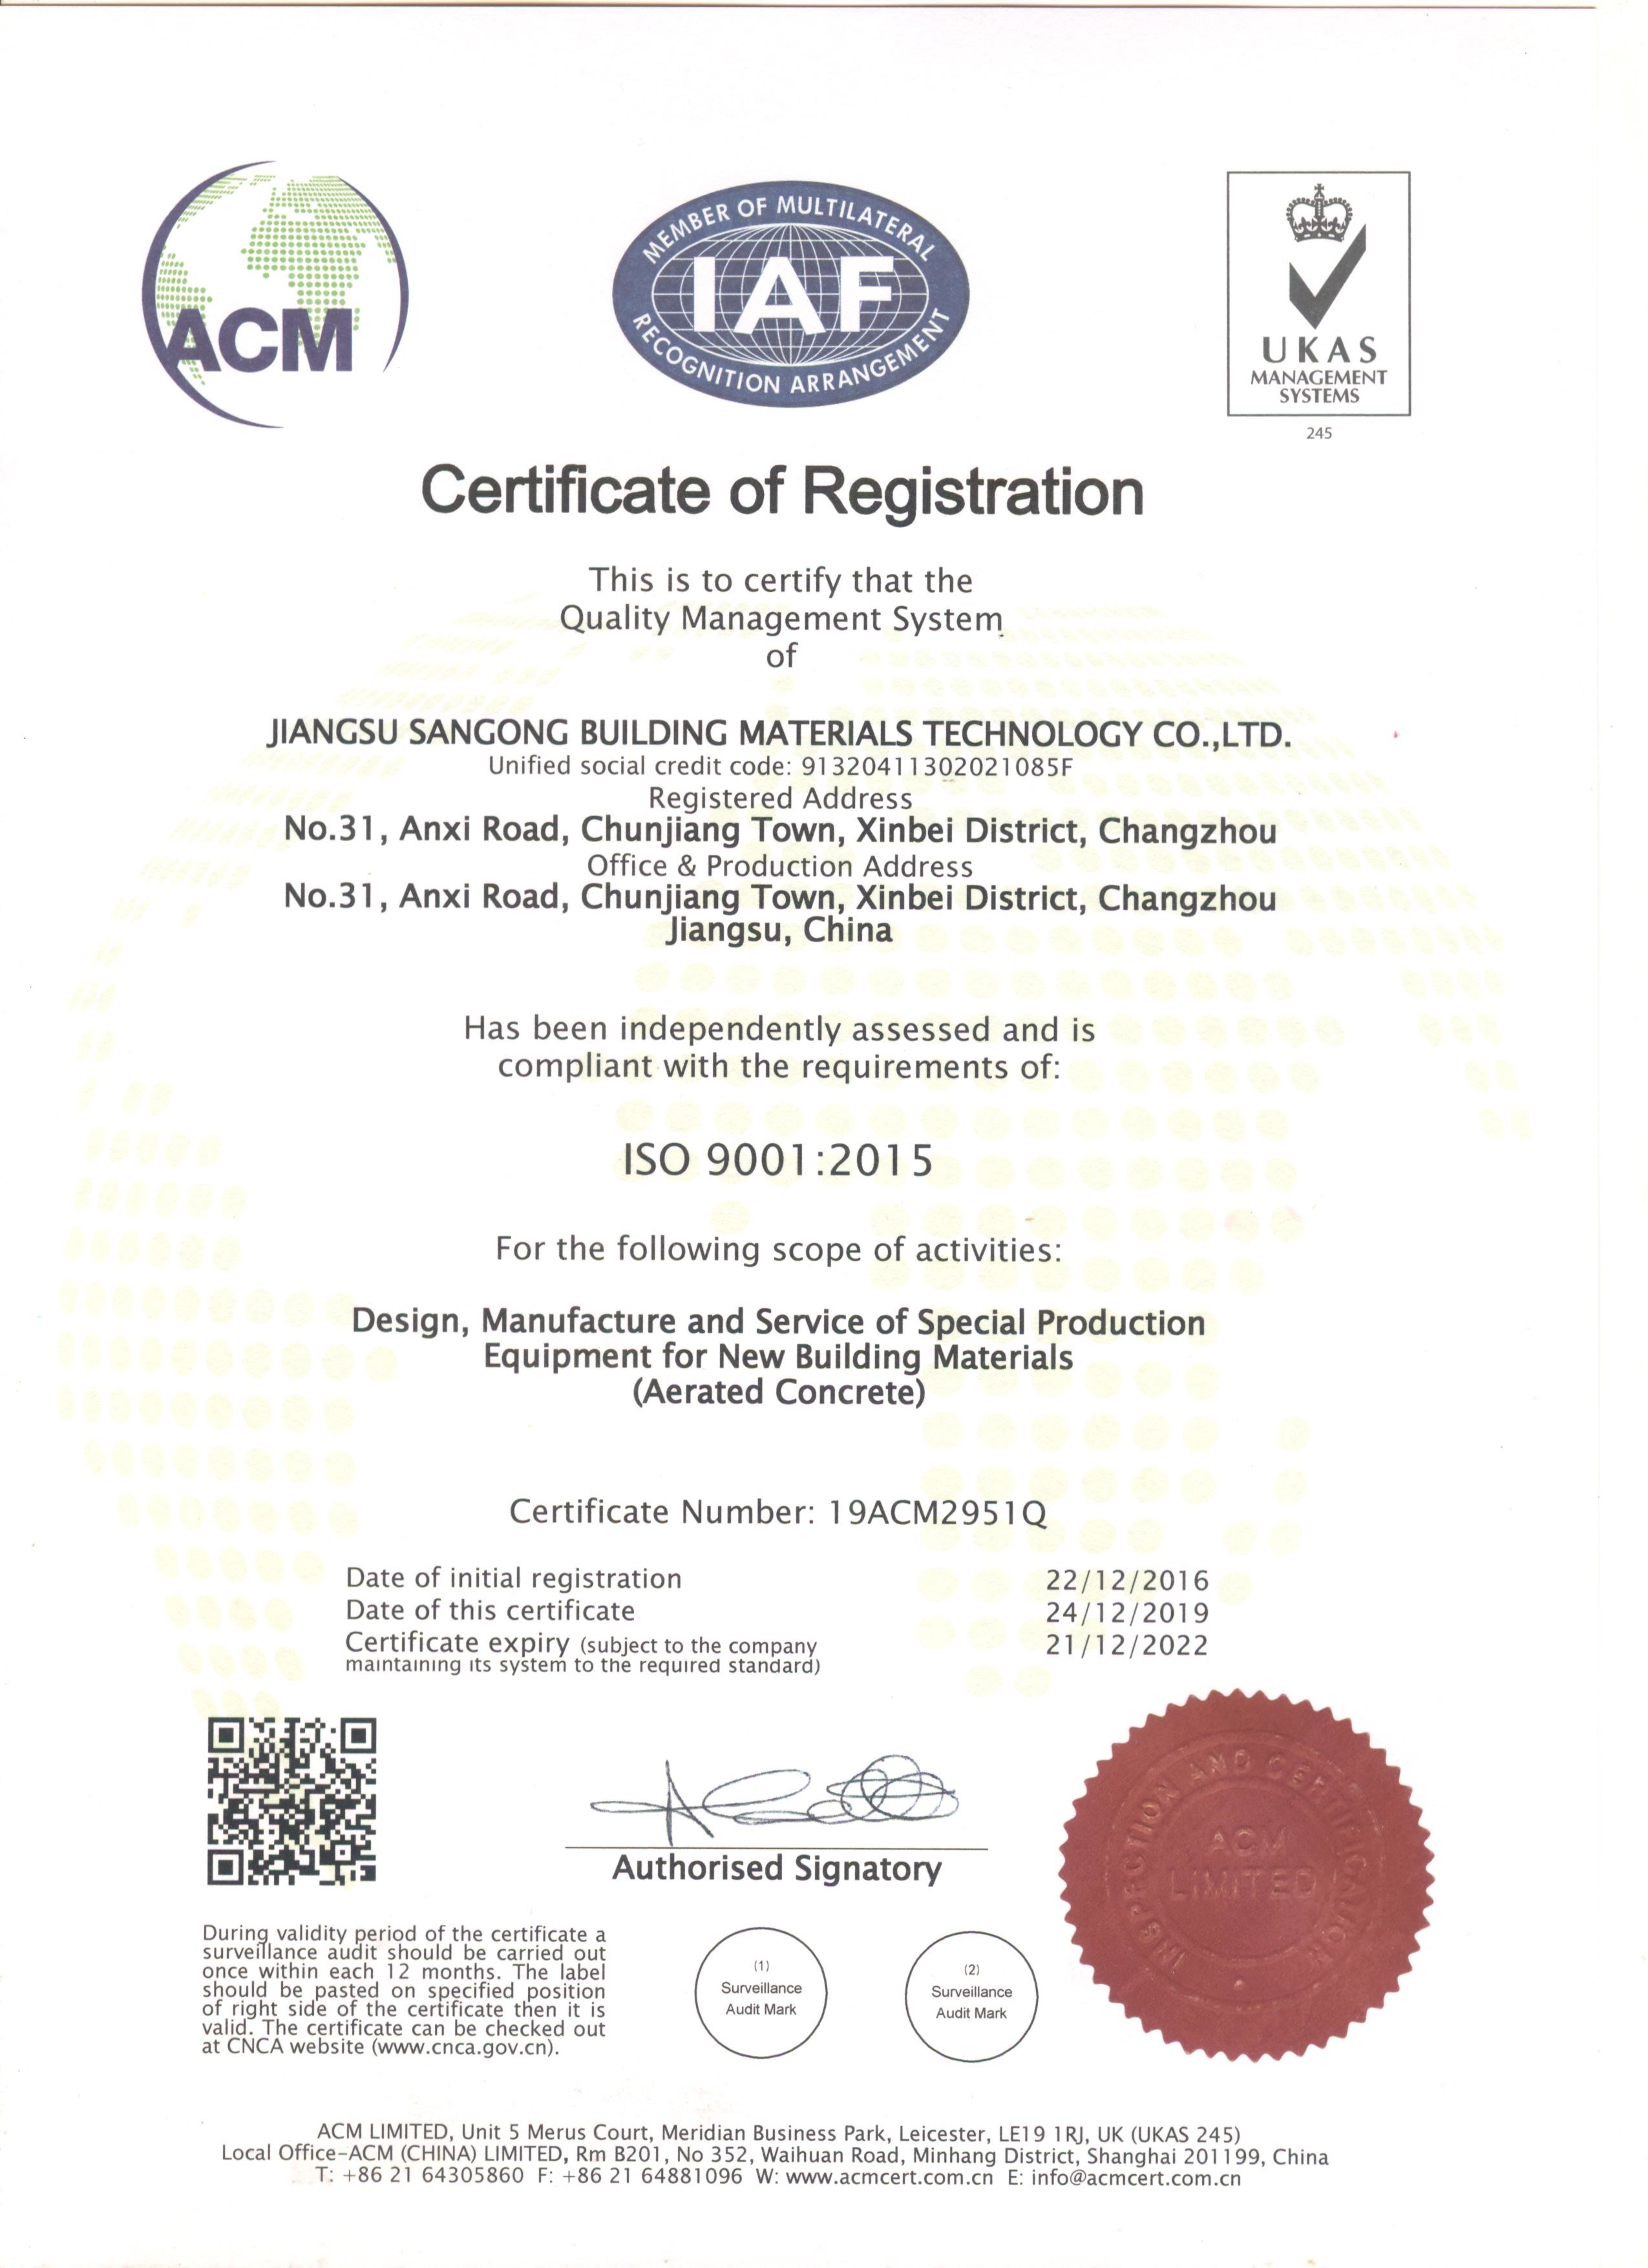 Jiangsu Sankon Building Materials Technology Co., Ltd. Certifications